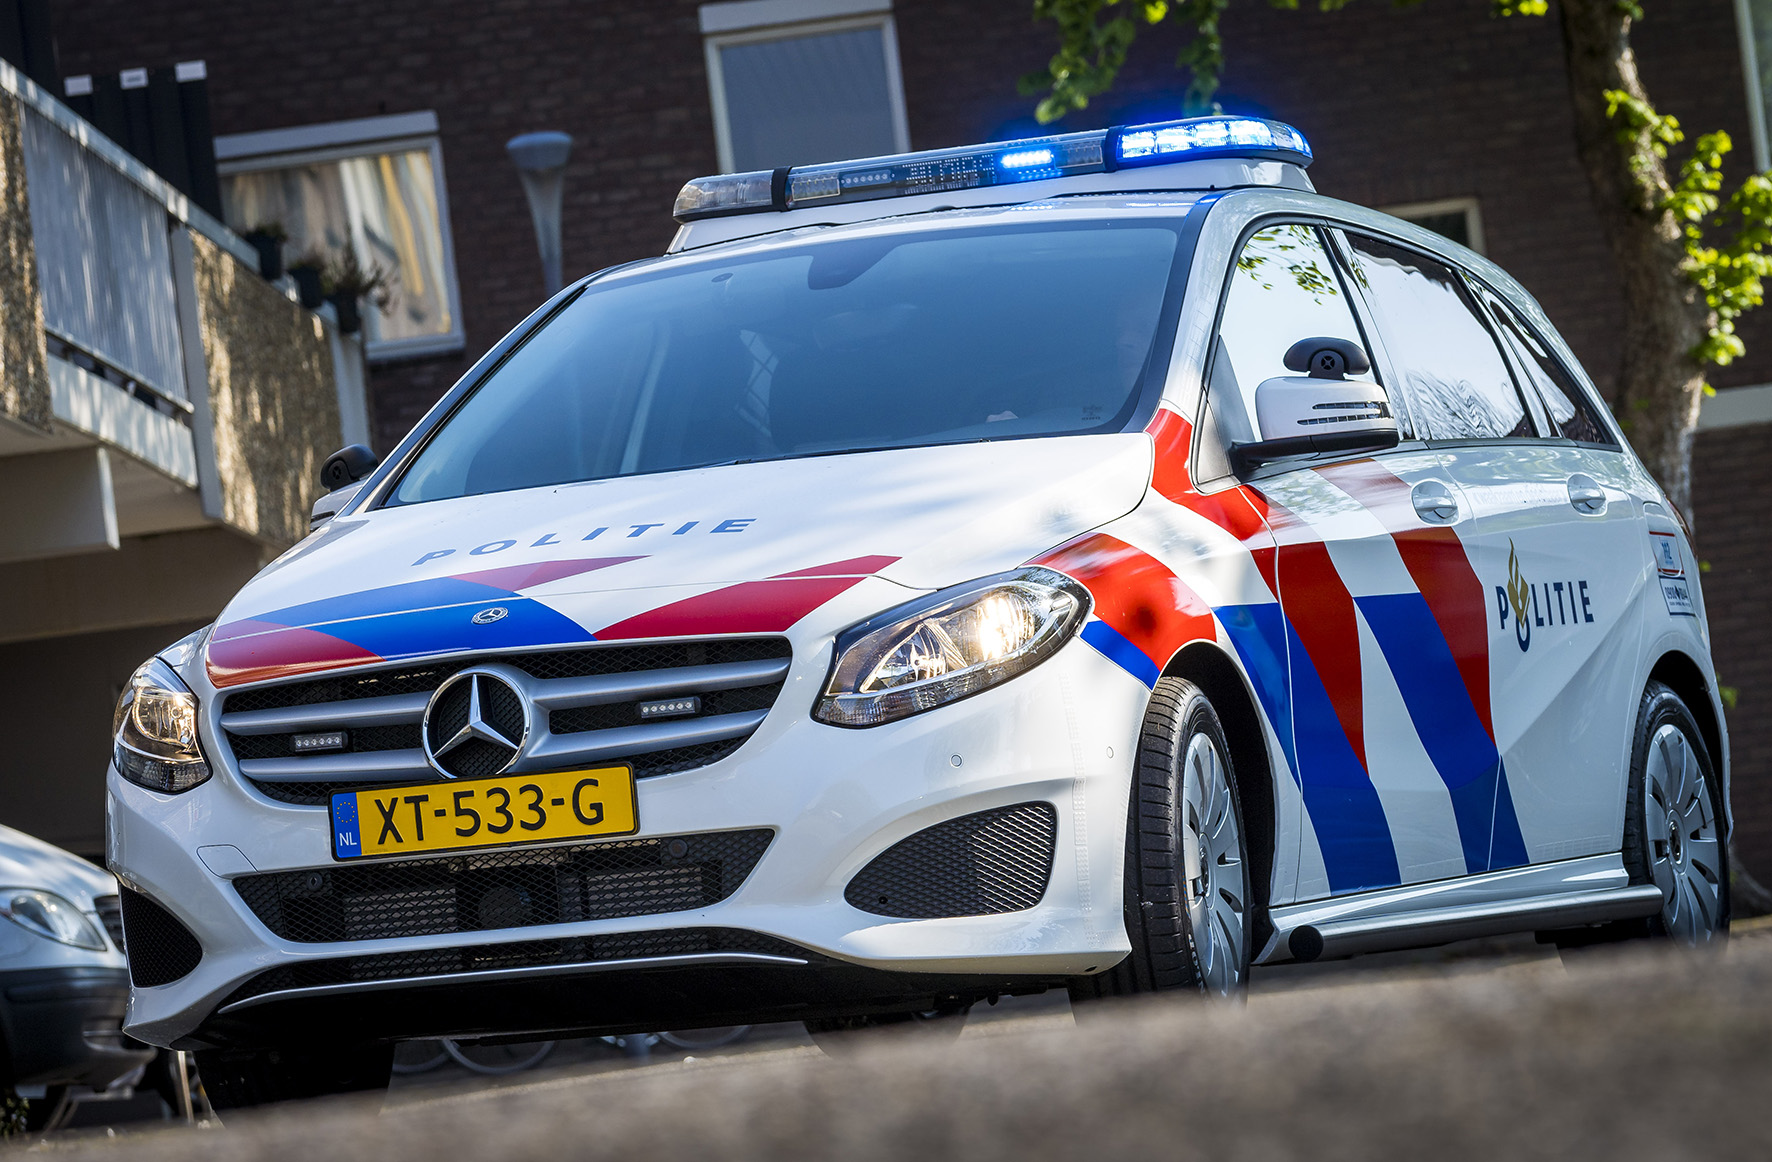 Politie met grote spoed naar Meeuwenlaan in Amsterdam